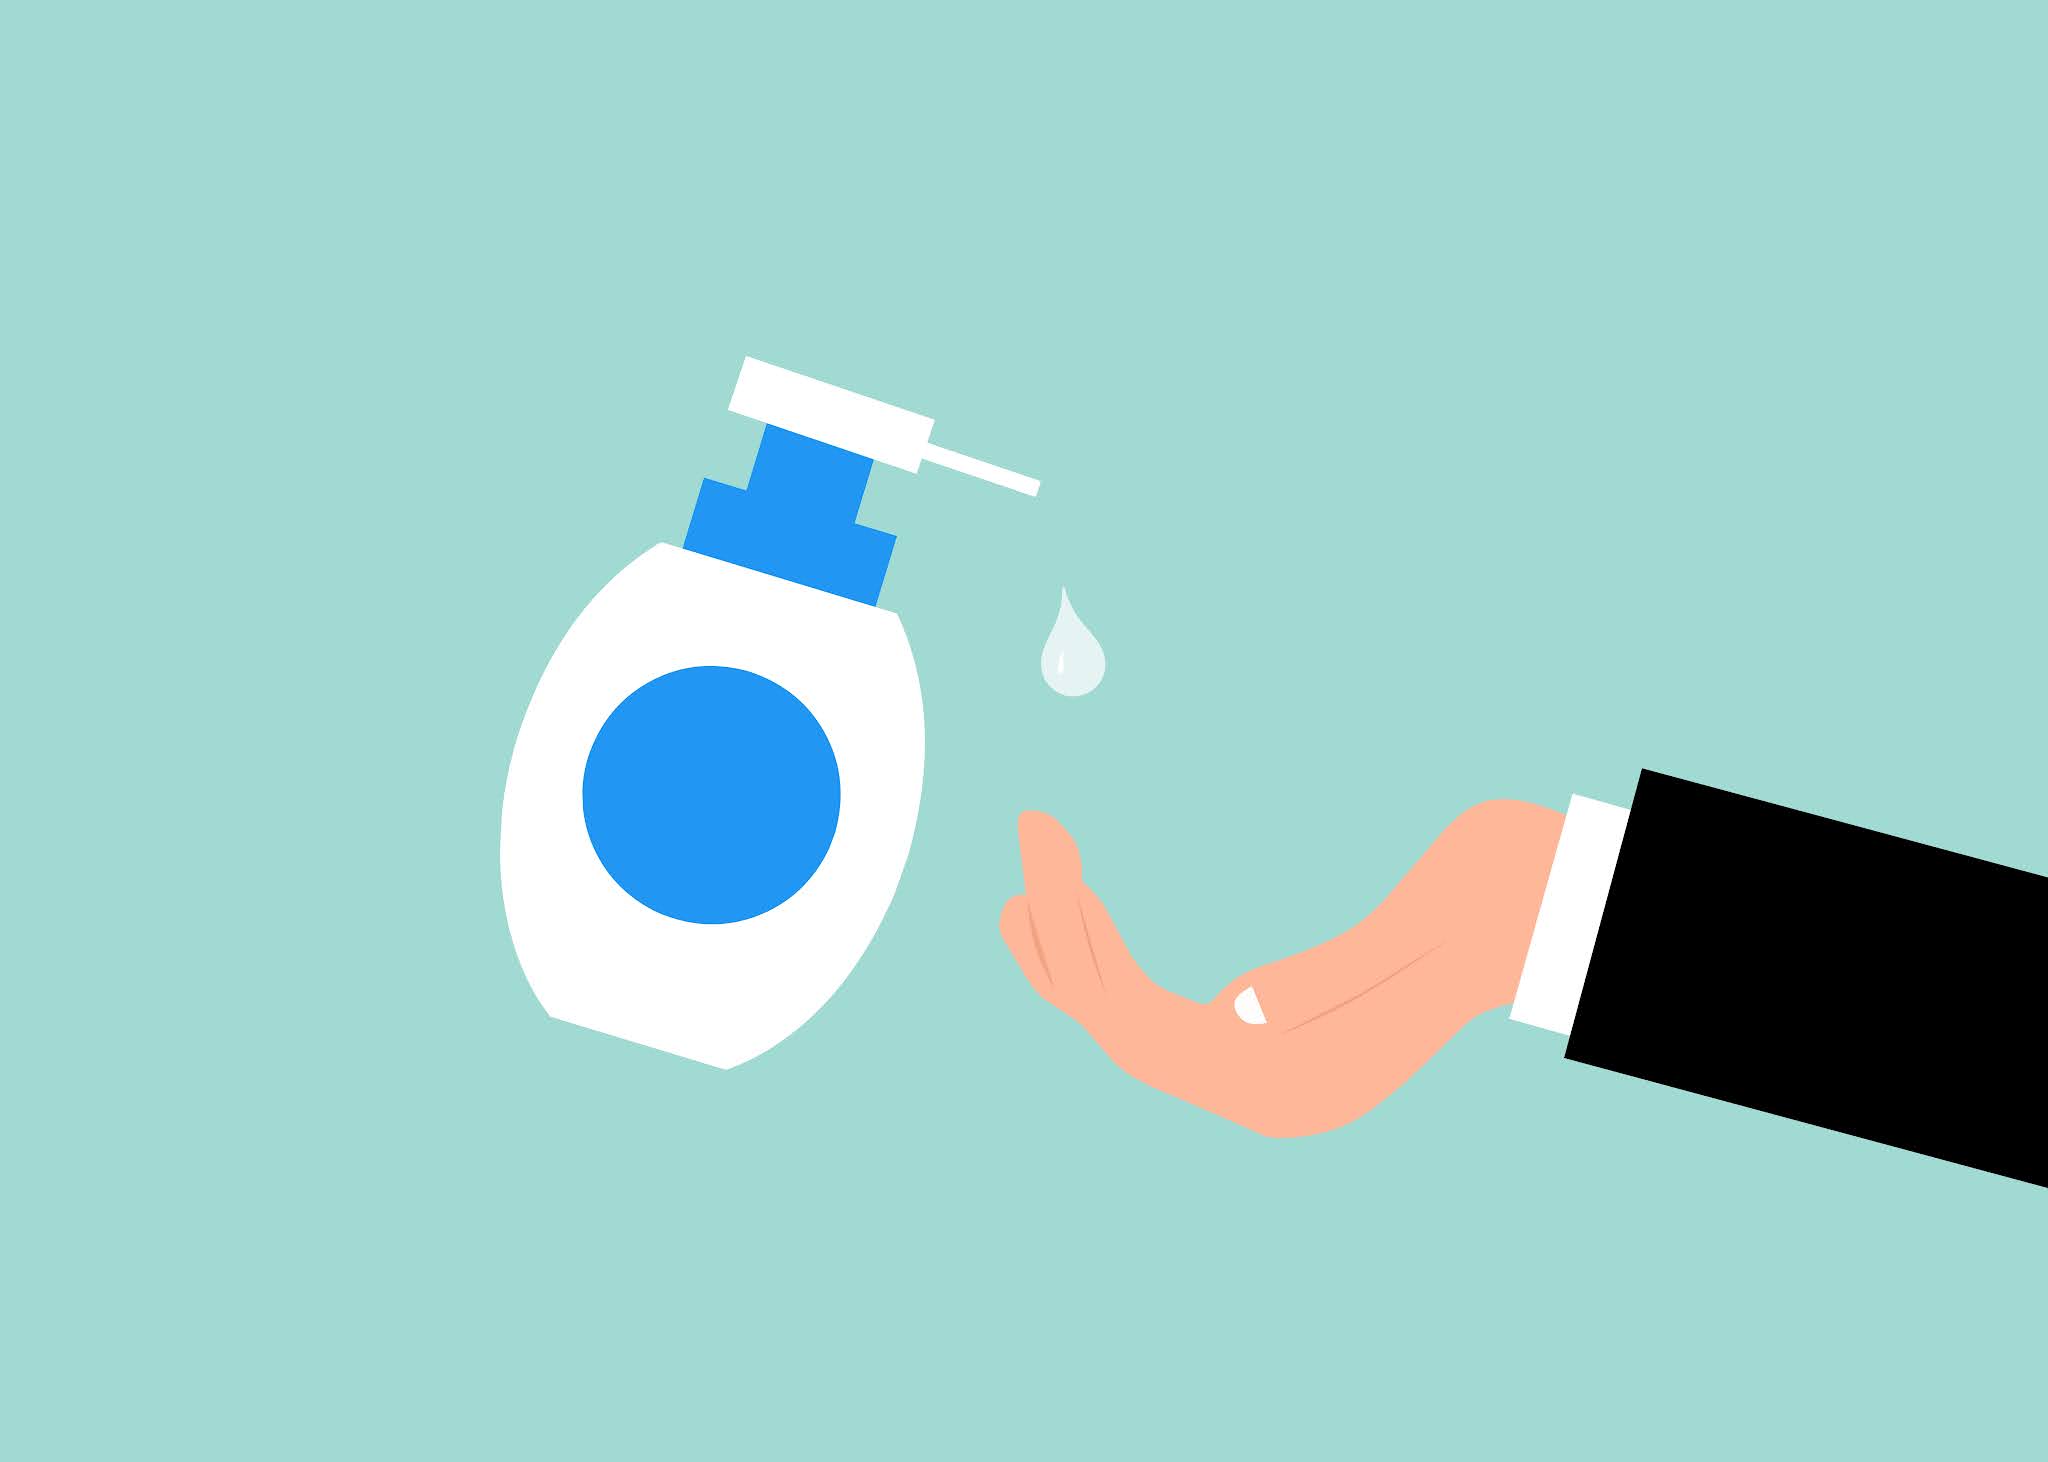 Using Hand sanitizer graphic design